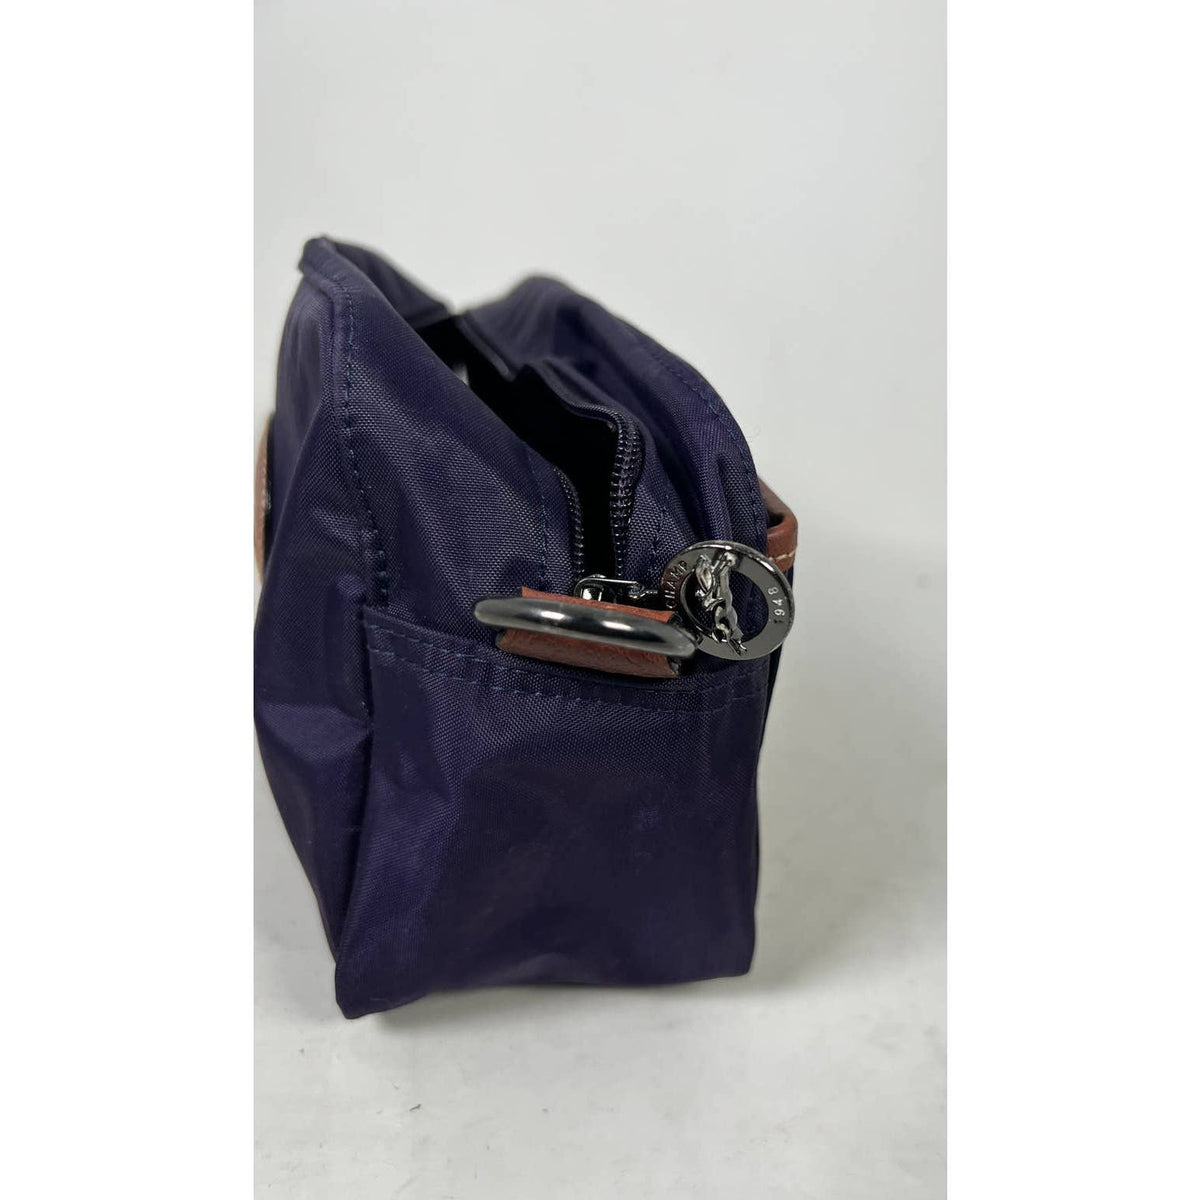 Longchamp Purple Toiletry Bag